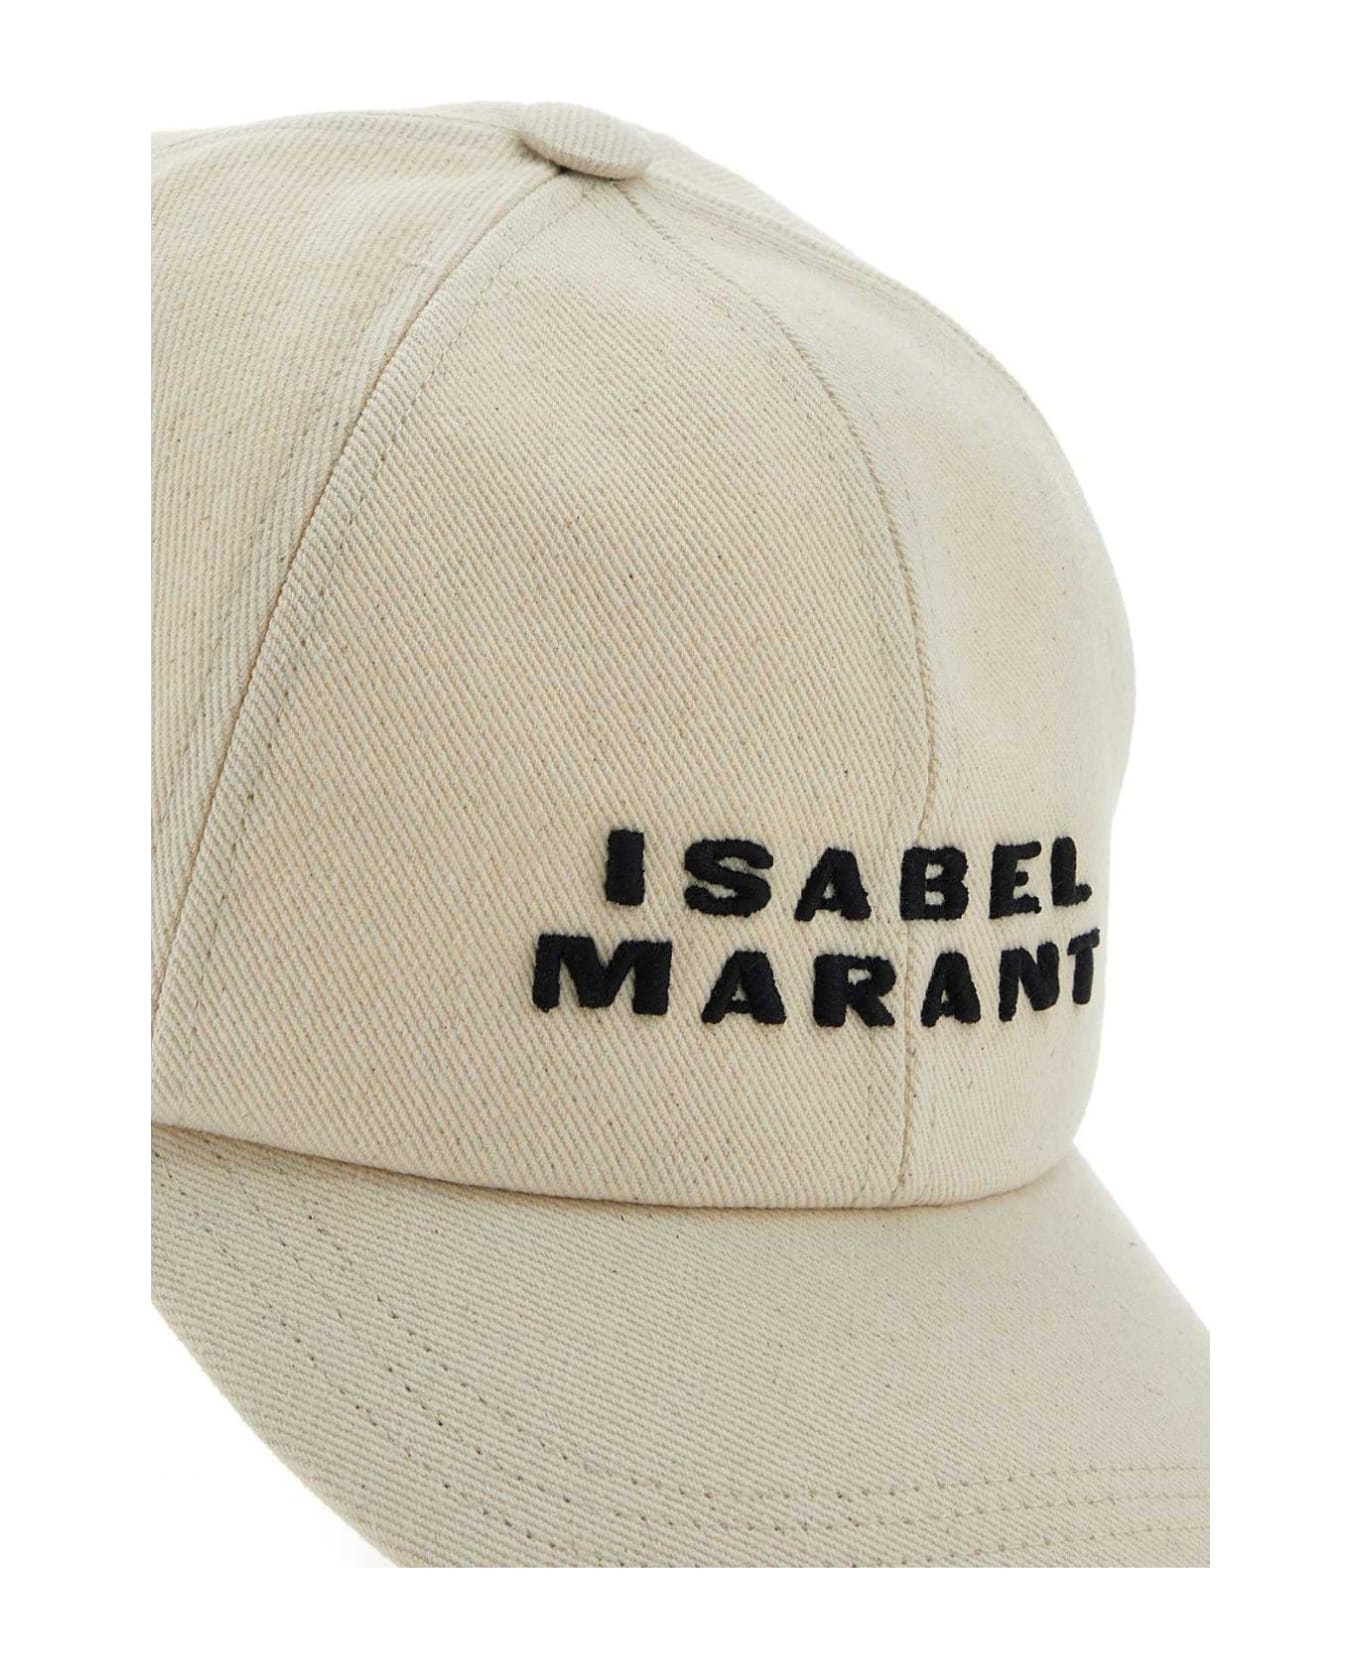 Isabel Marant Logo Embroidered Baseball Cap - ECRU/BLACK